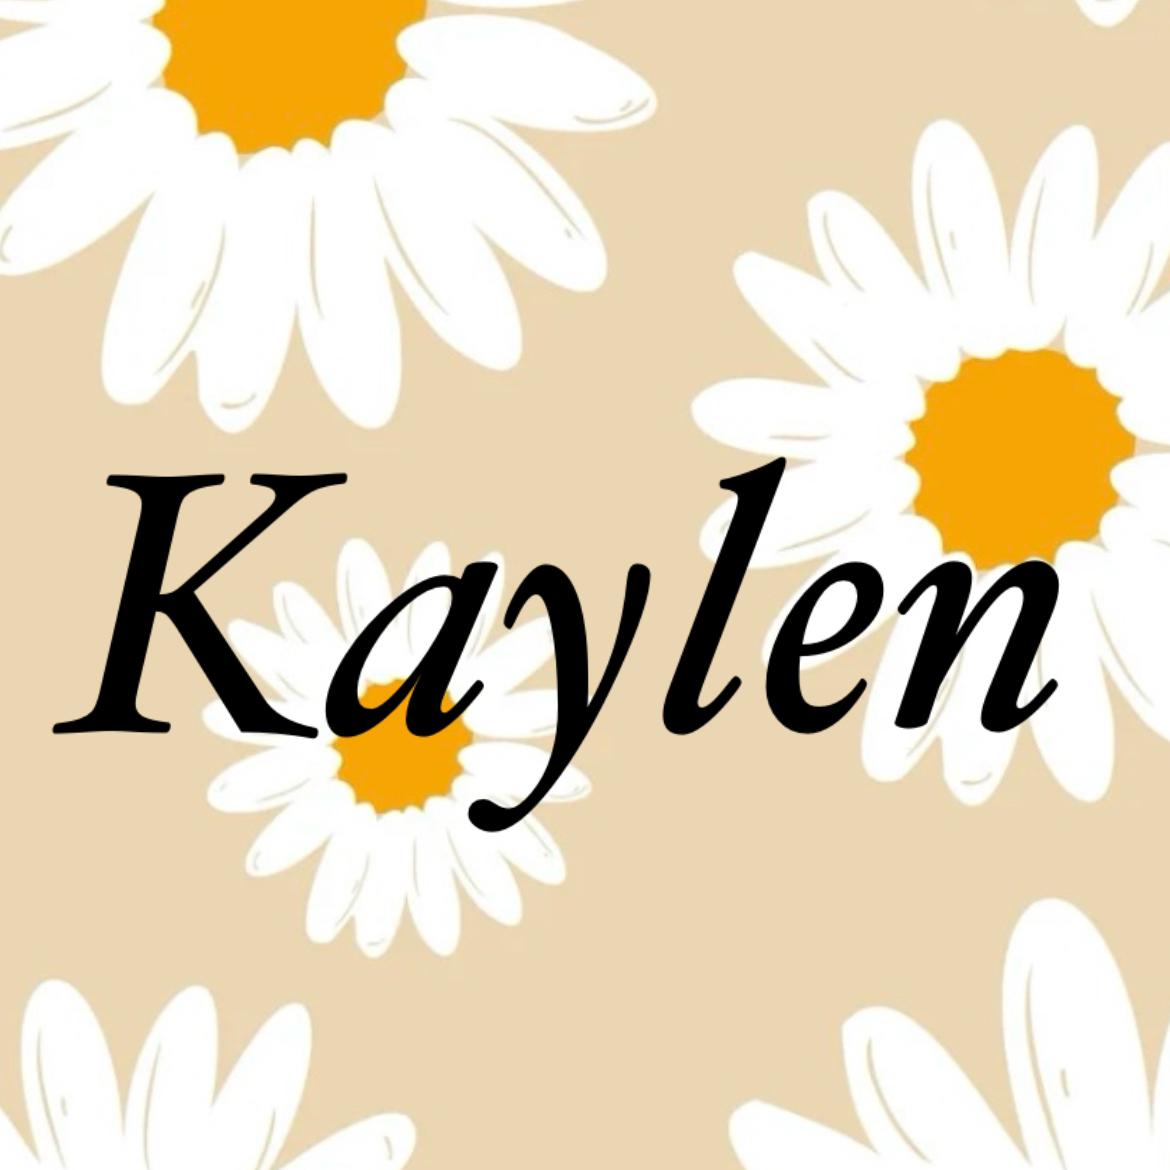 Kaylen McGowin💕's images